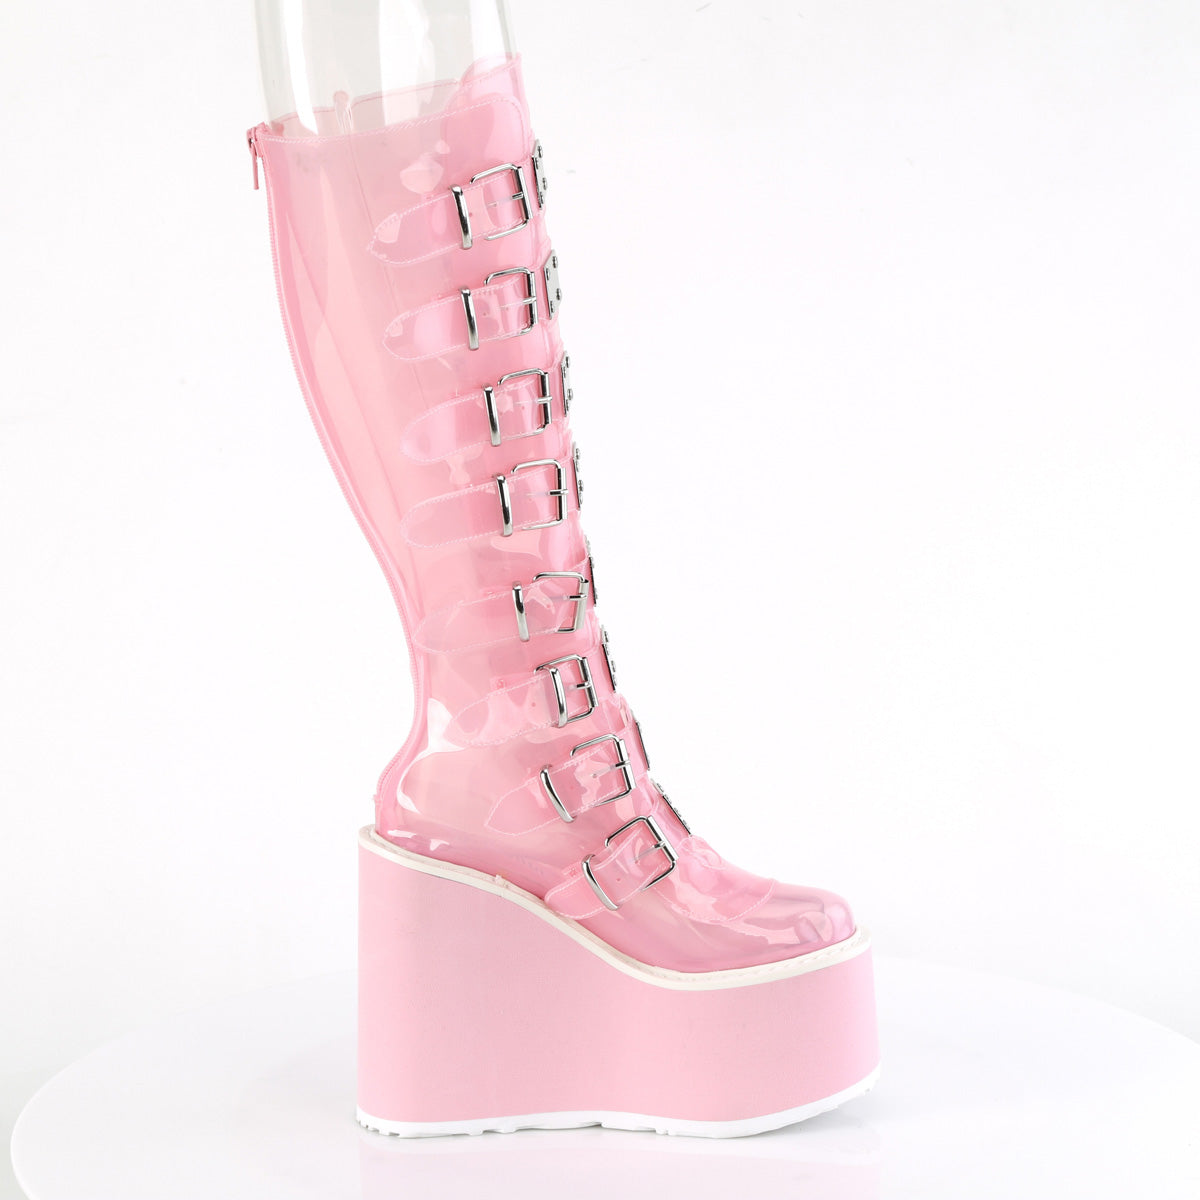 SWING-815C Demonia B Pink TPU Women's Mid-Calf & Knee High Boots [Demonia Cult Alternative Footwear]